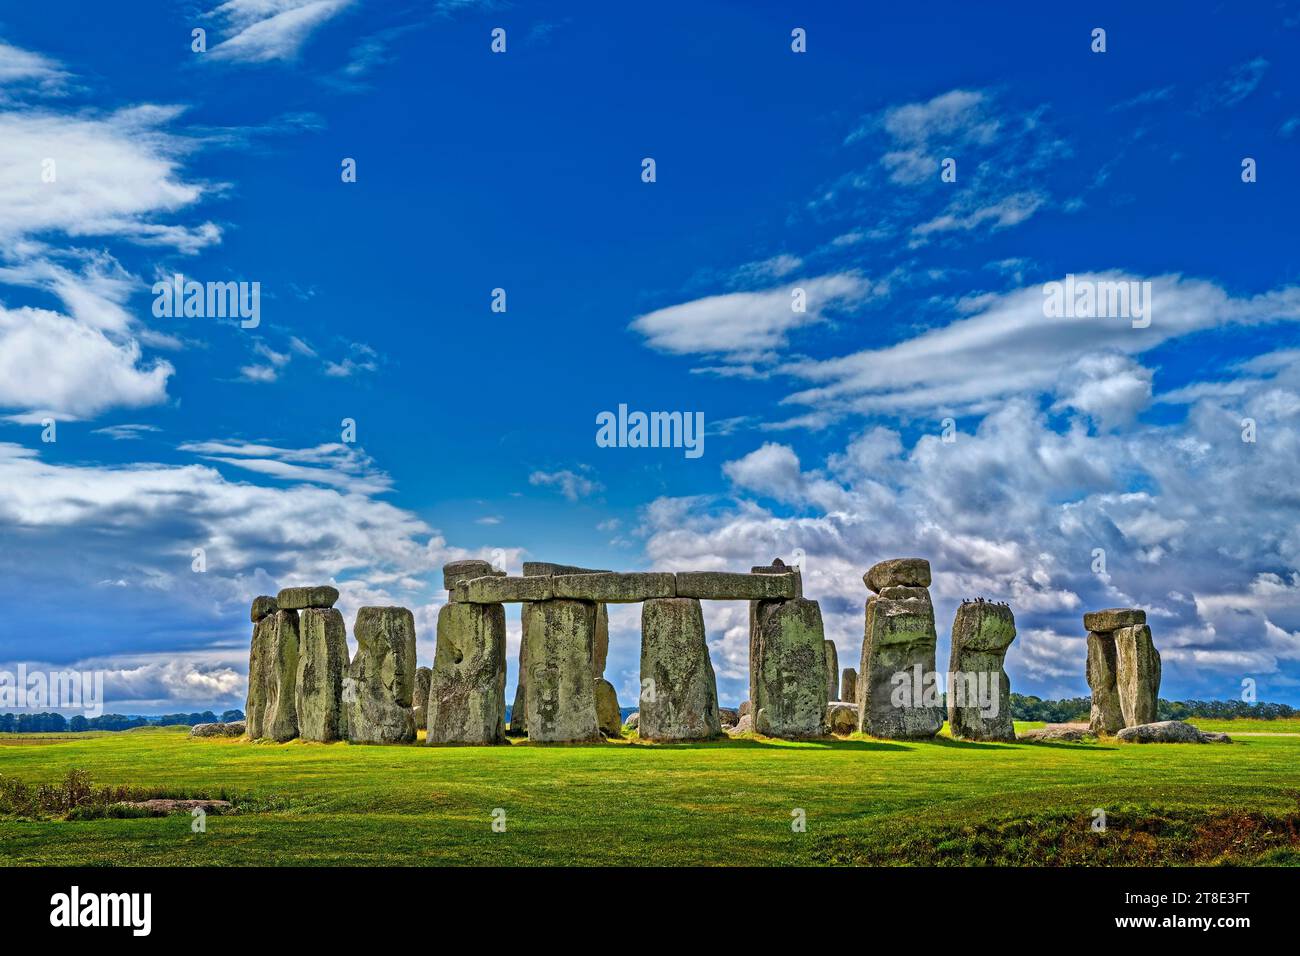 Stonehenge Stone Circle on Salisbury Plain in Wiltshire, England with no people present. Stock Photo